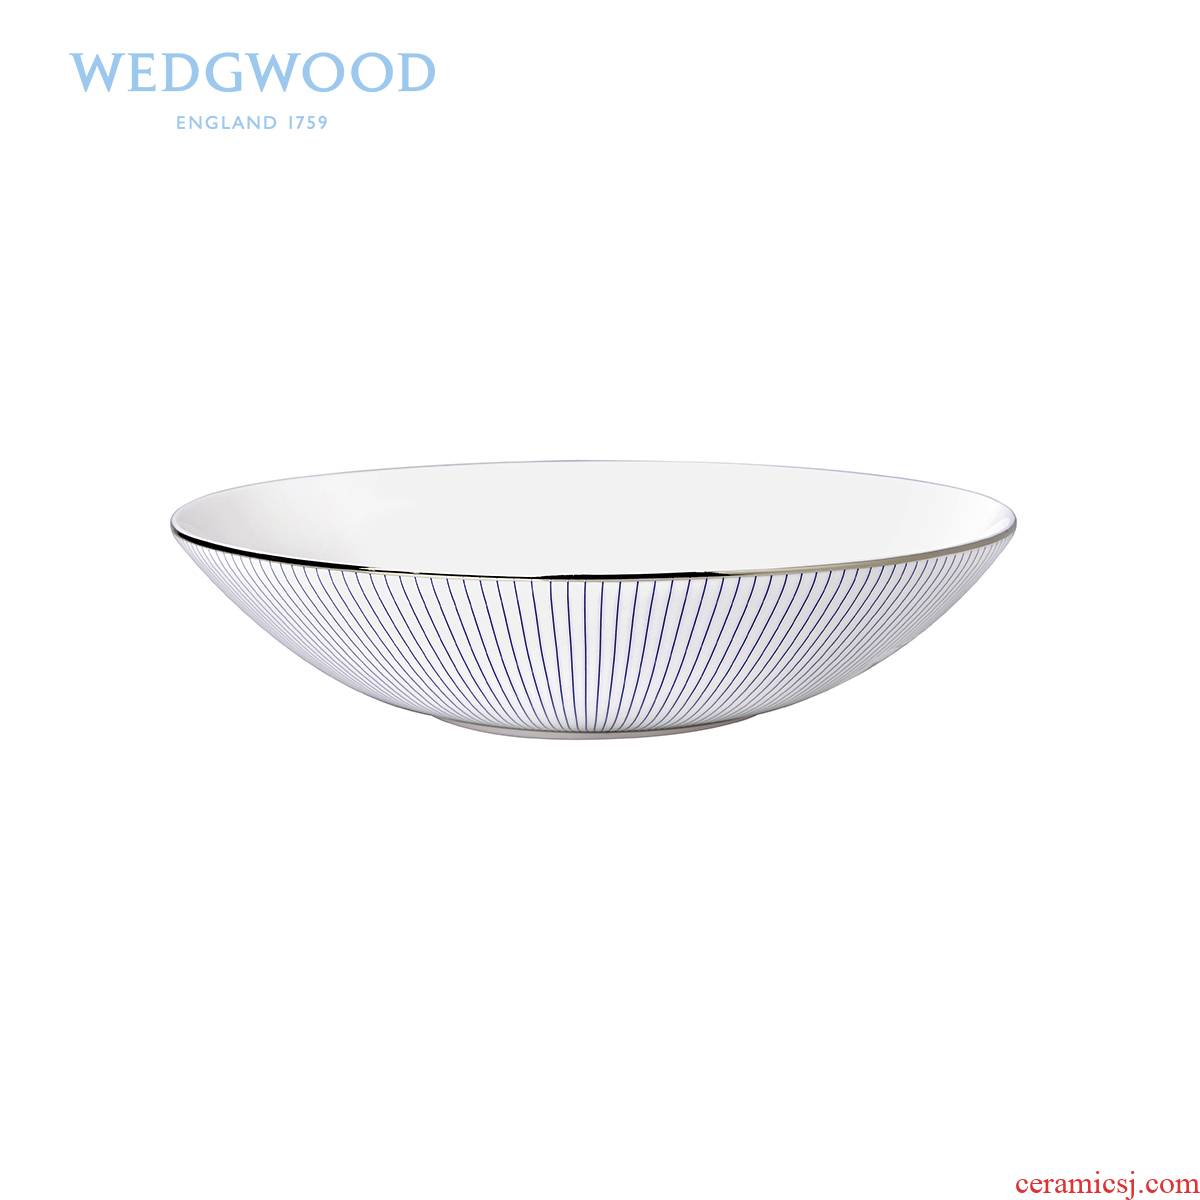 British Wedgwood Jasper Conran elegant stripe ipads 18 cm deep porcelain plate